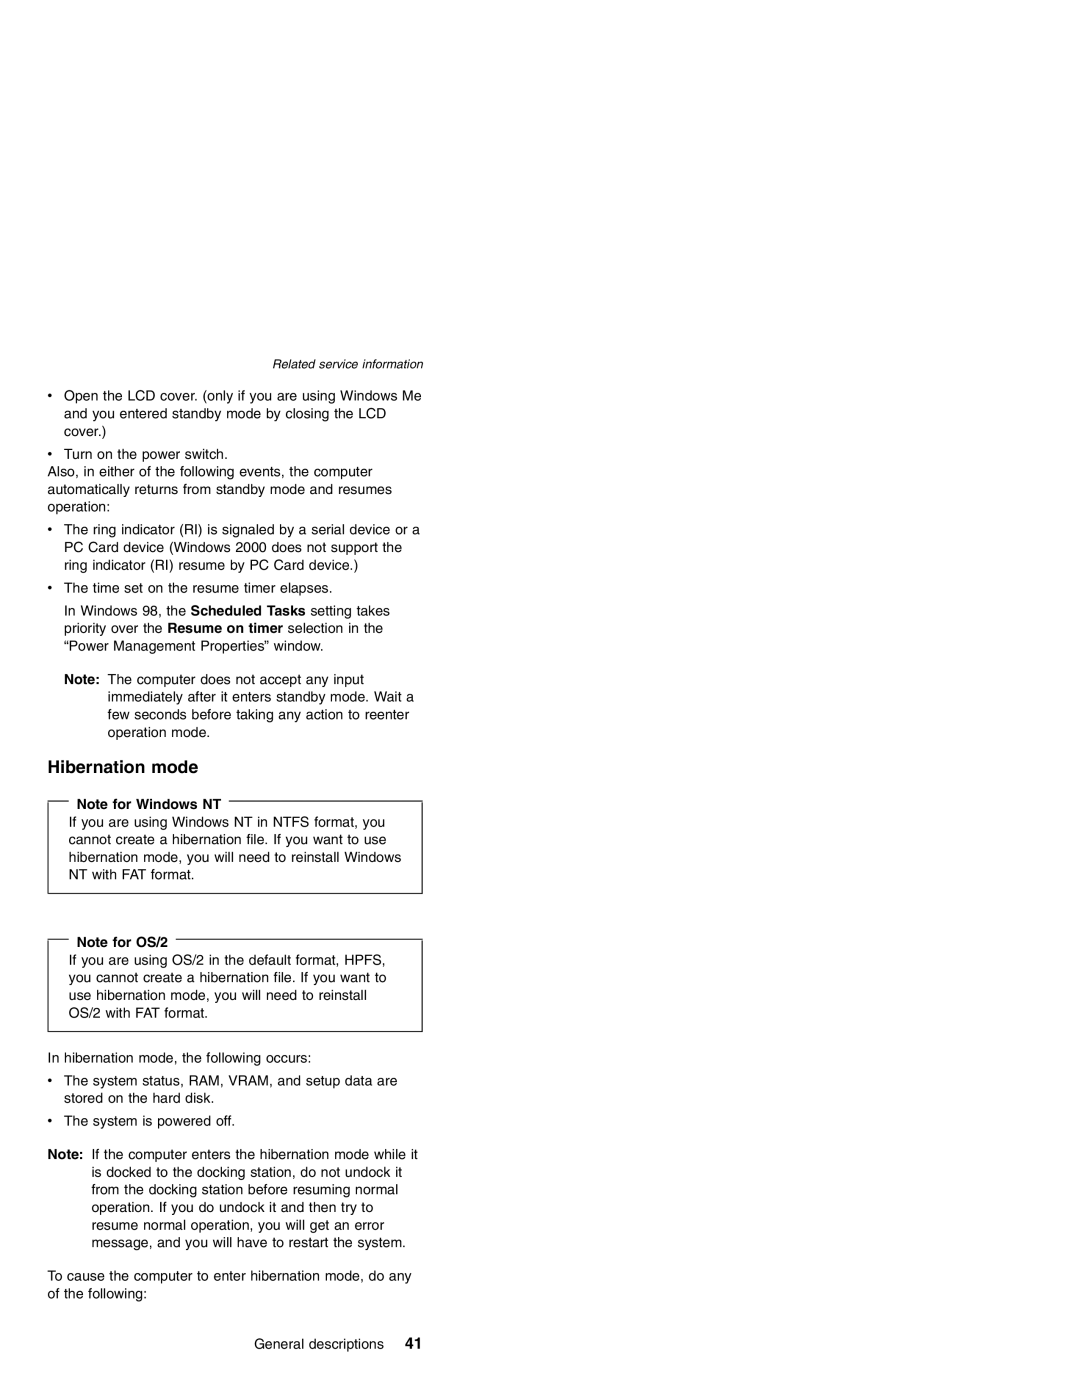 Lenovo MT 2369 manual Hibernation mode, Note for Windows NT, Note for OS/2 